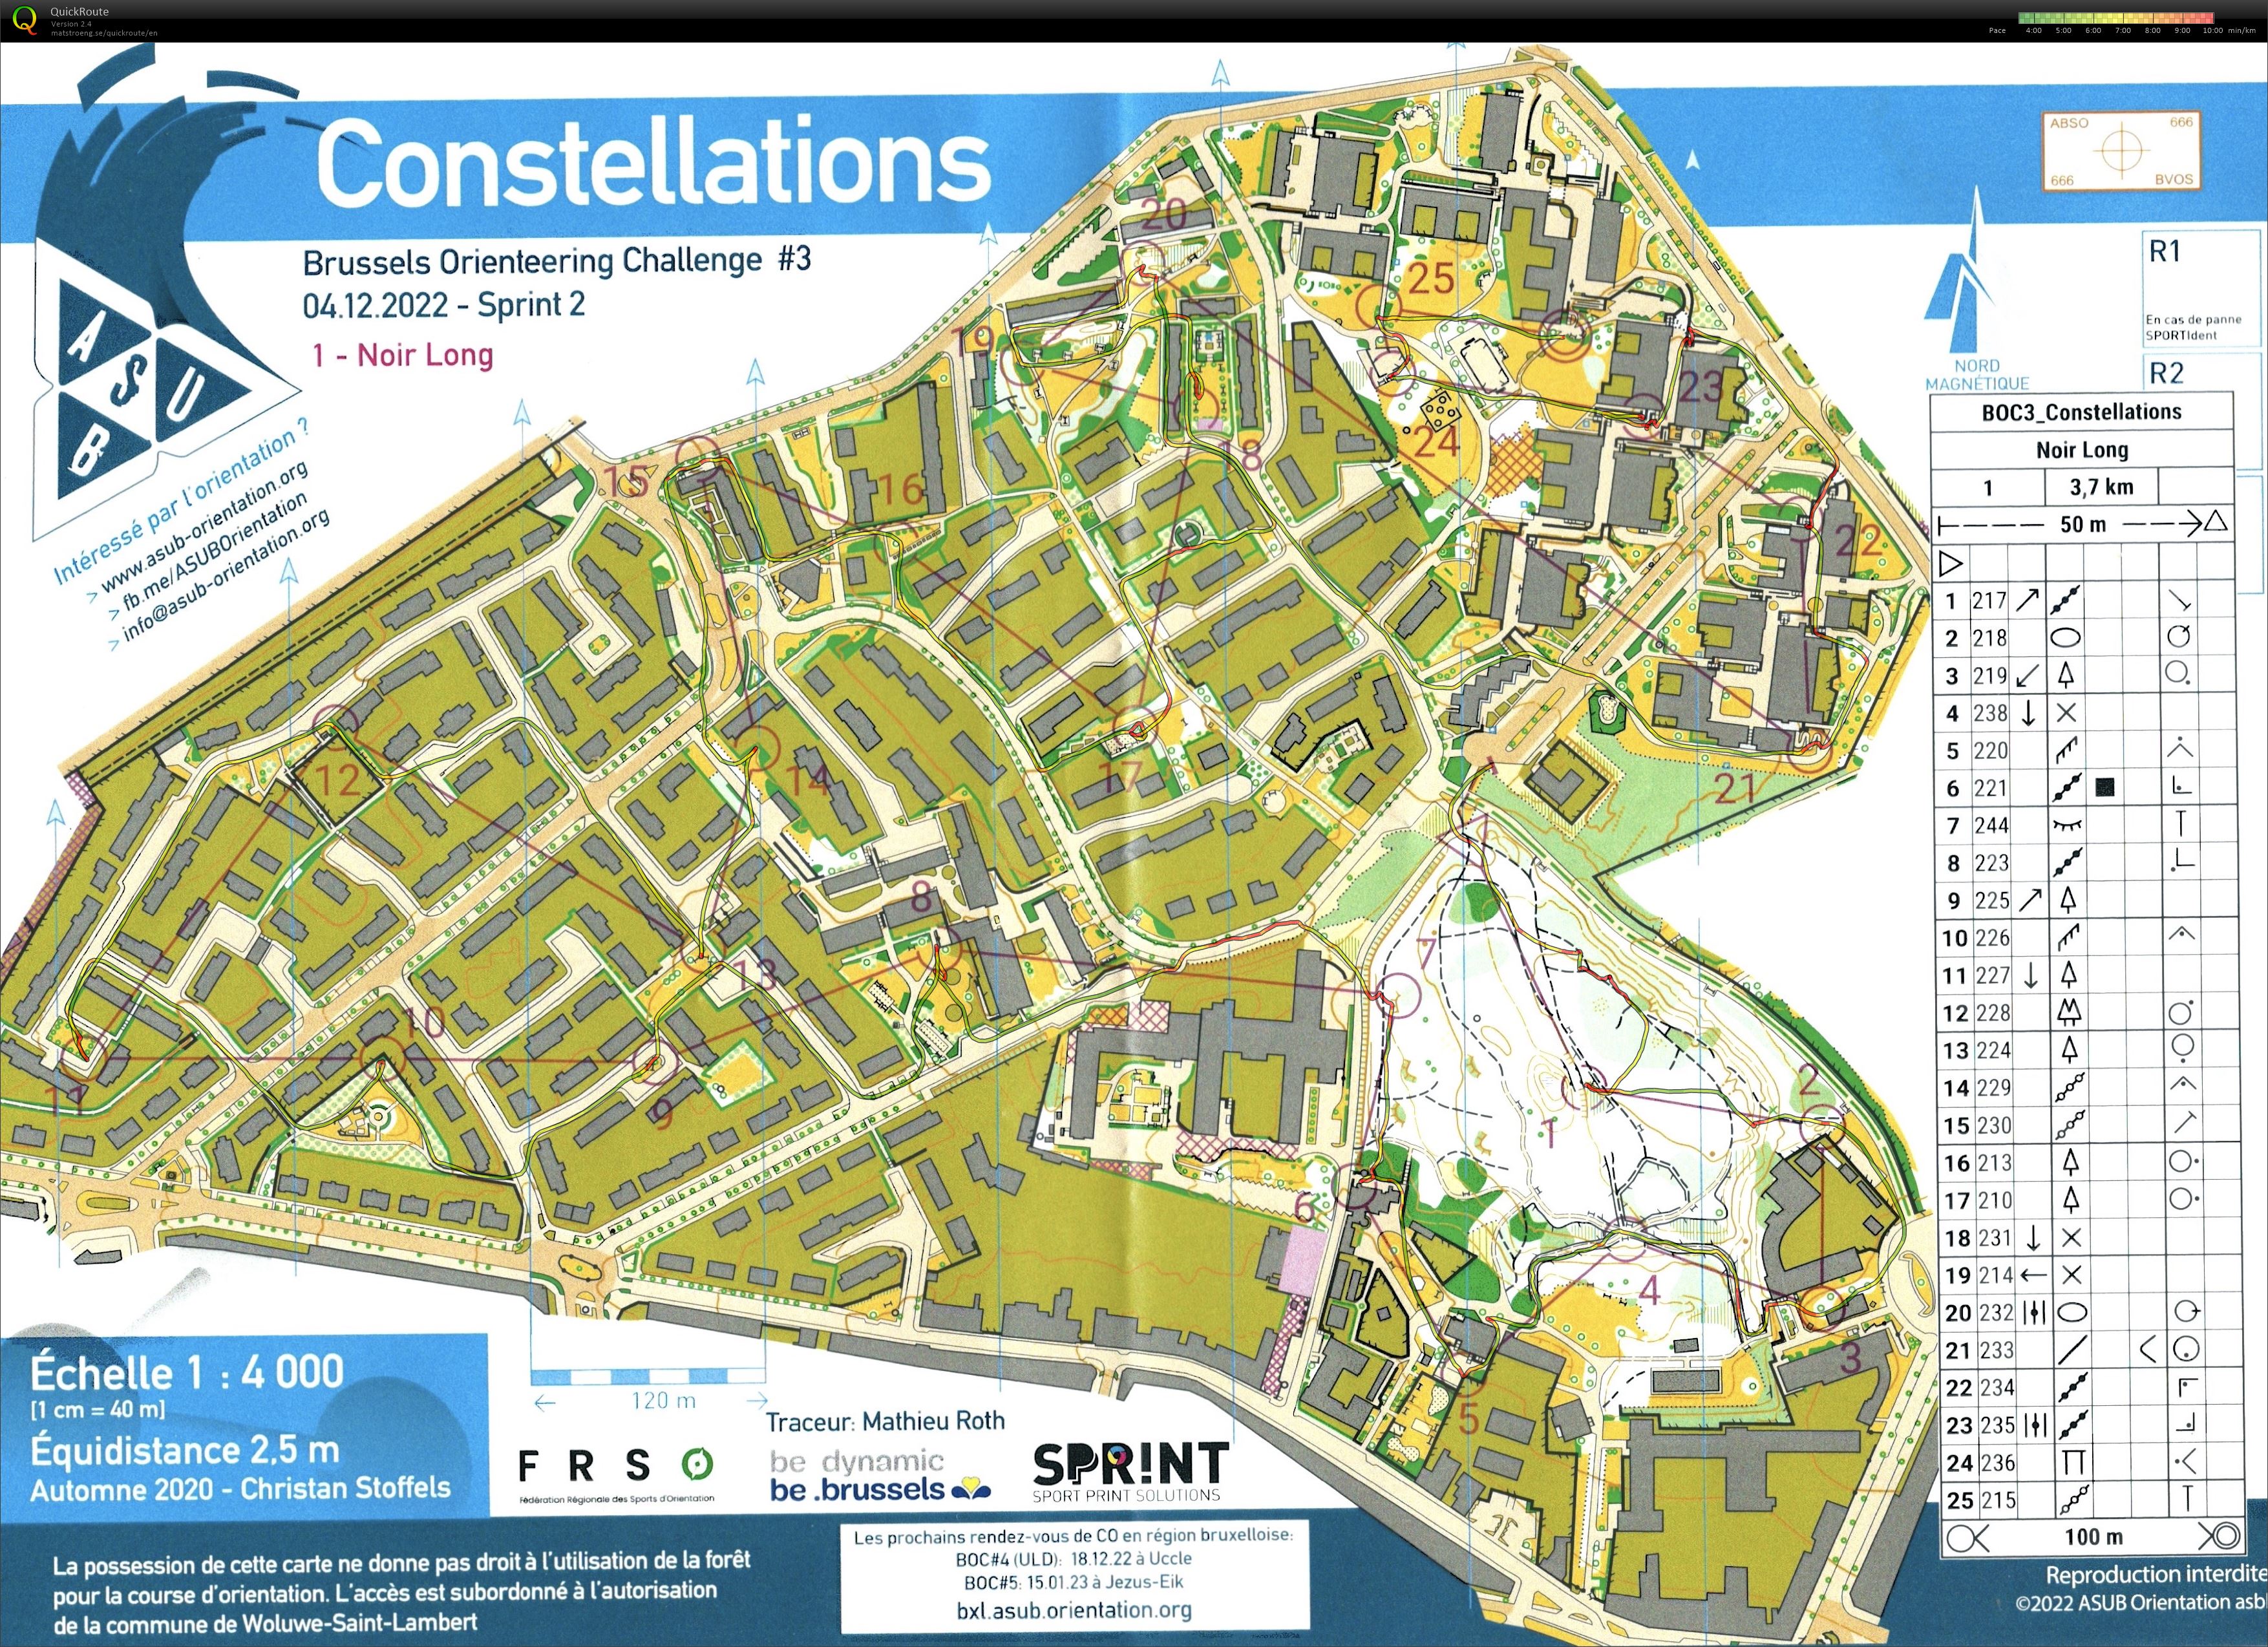 Brussels Orienteering Challenge #3 - Sprint 2 - Constellations (04.12.2022)